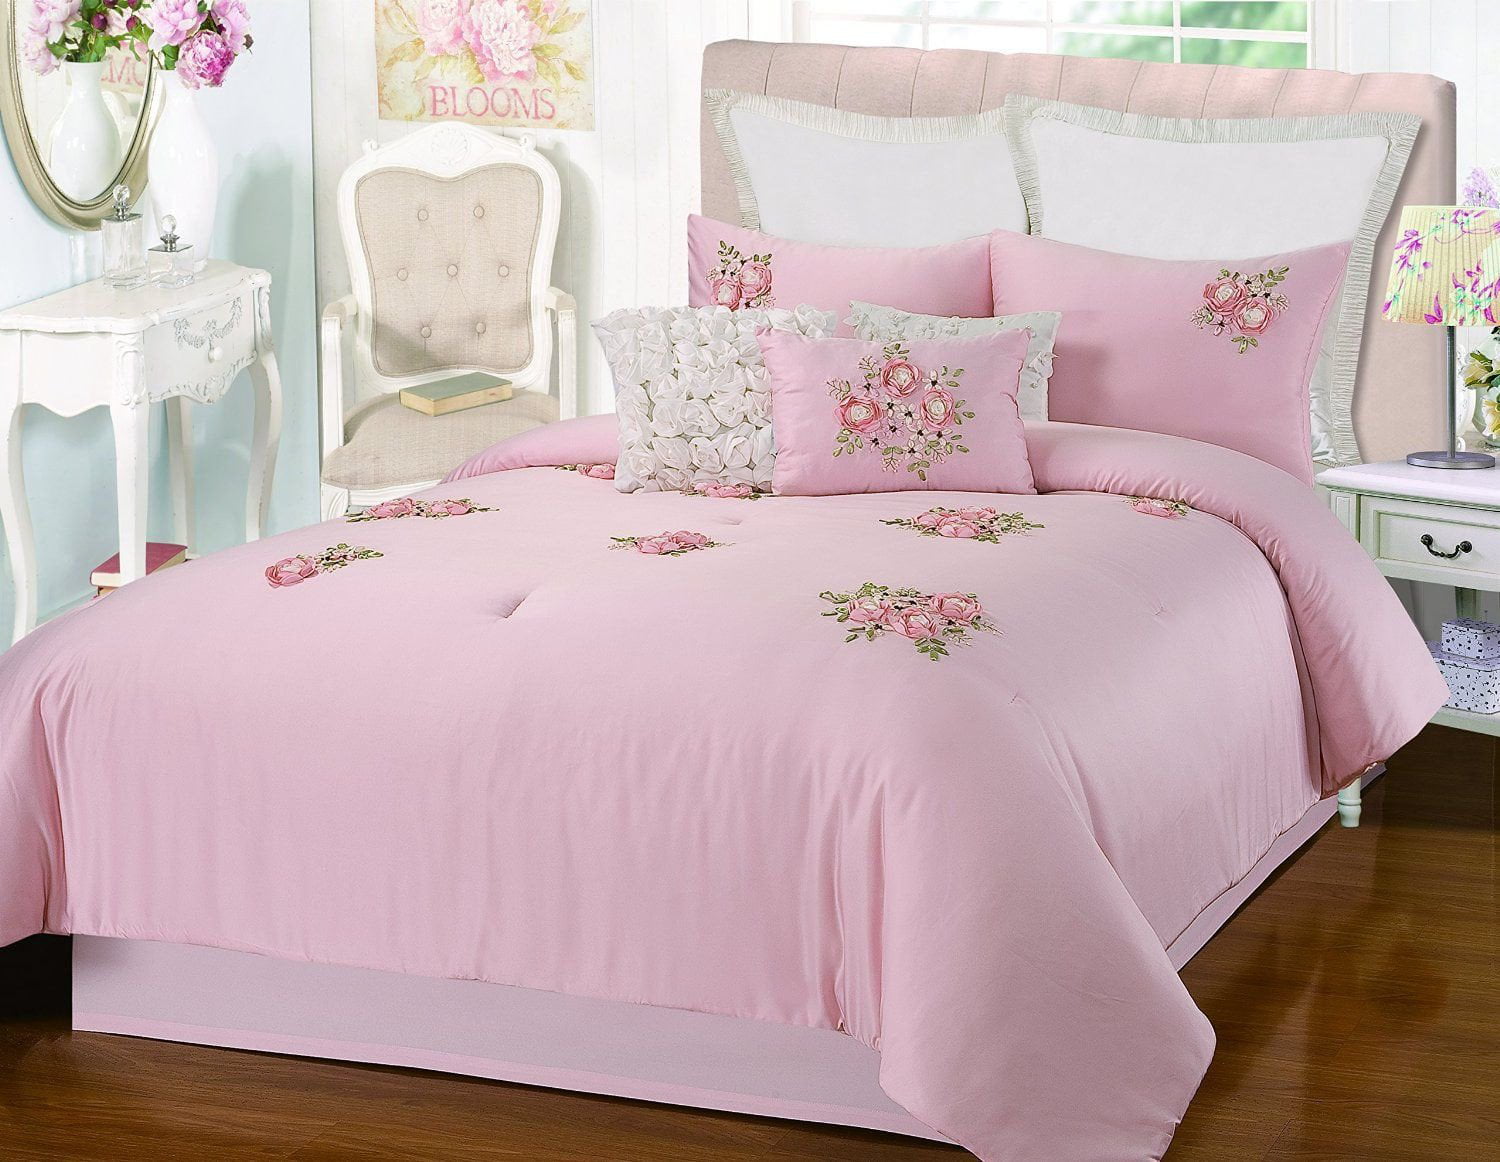 Rosetta Floral Bouquet Applique Pink 5 Piece Comforter Bed In A Bag Set